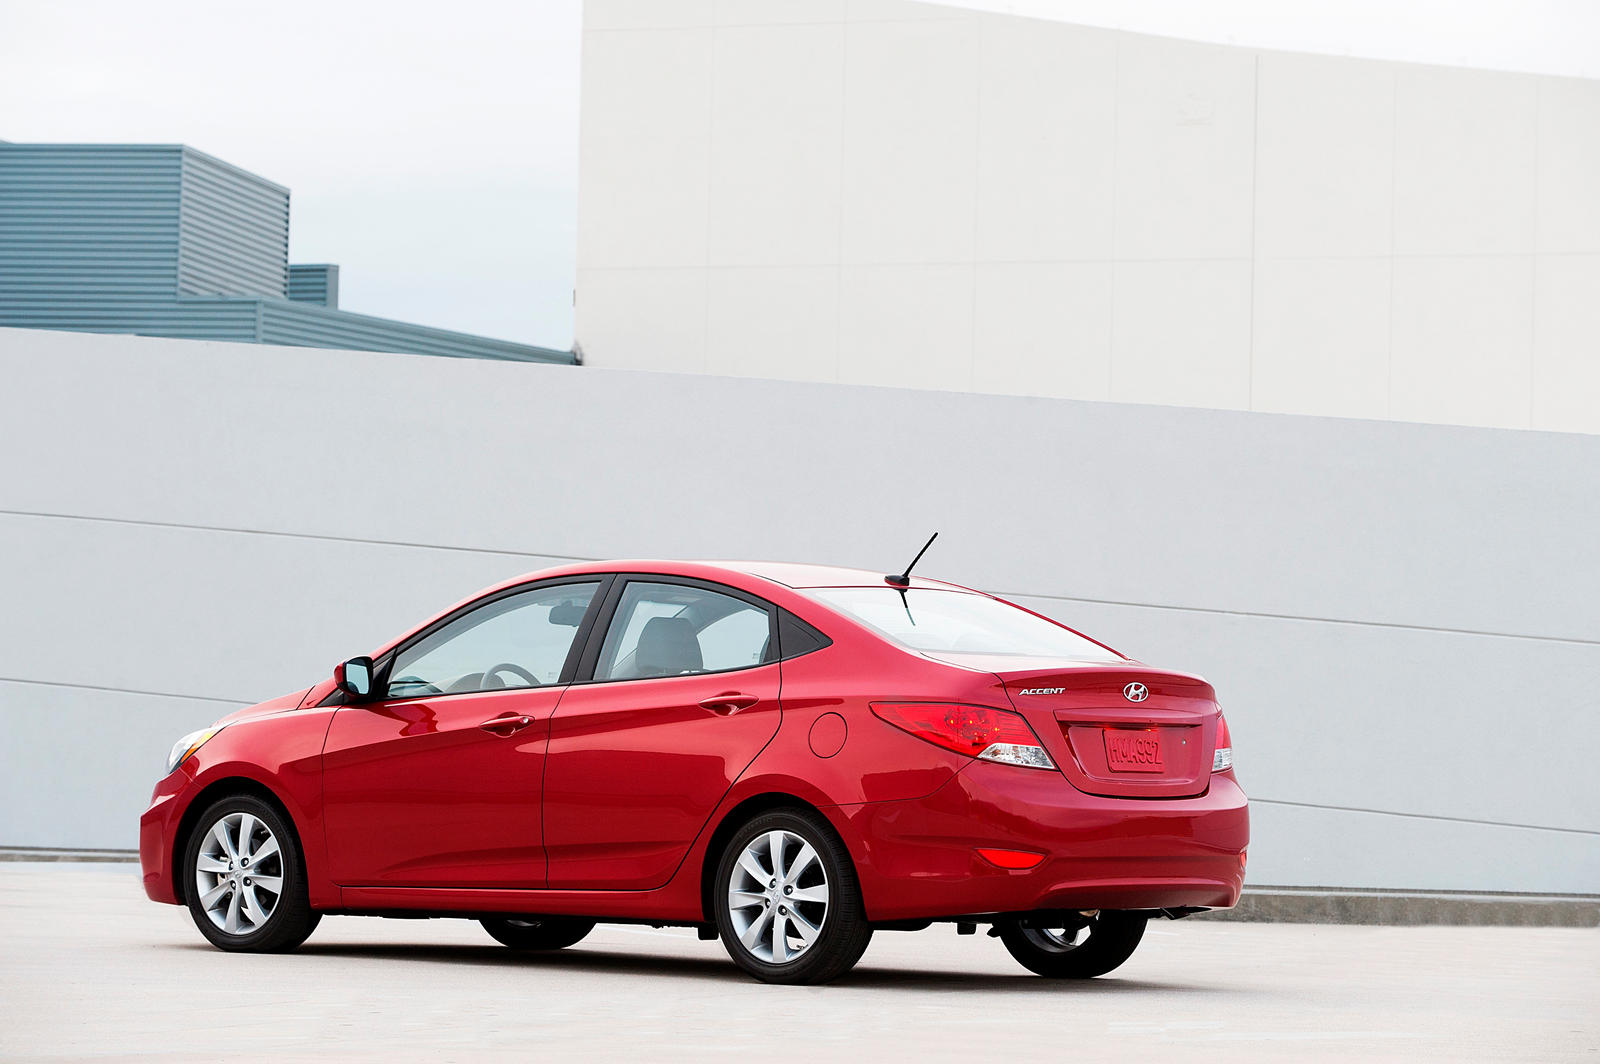 2013 Hyundai Accent: Review, Trims, Specs, Price, New Interior Features ...